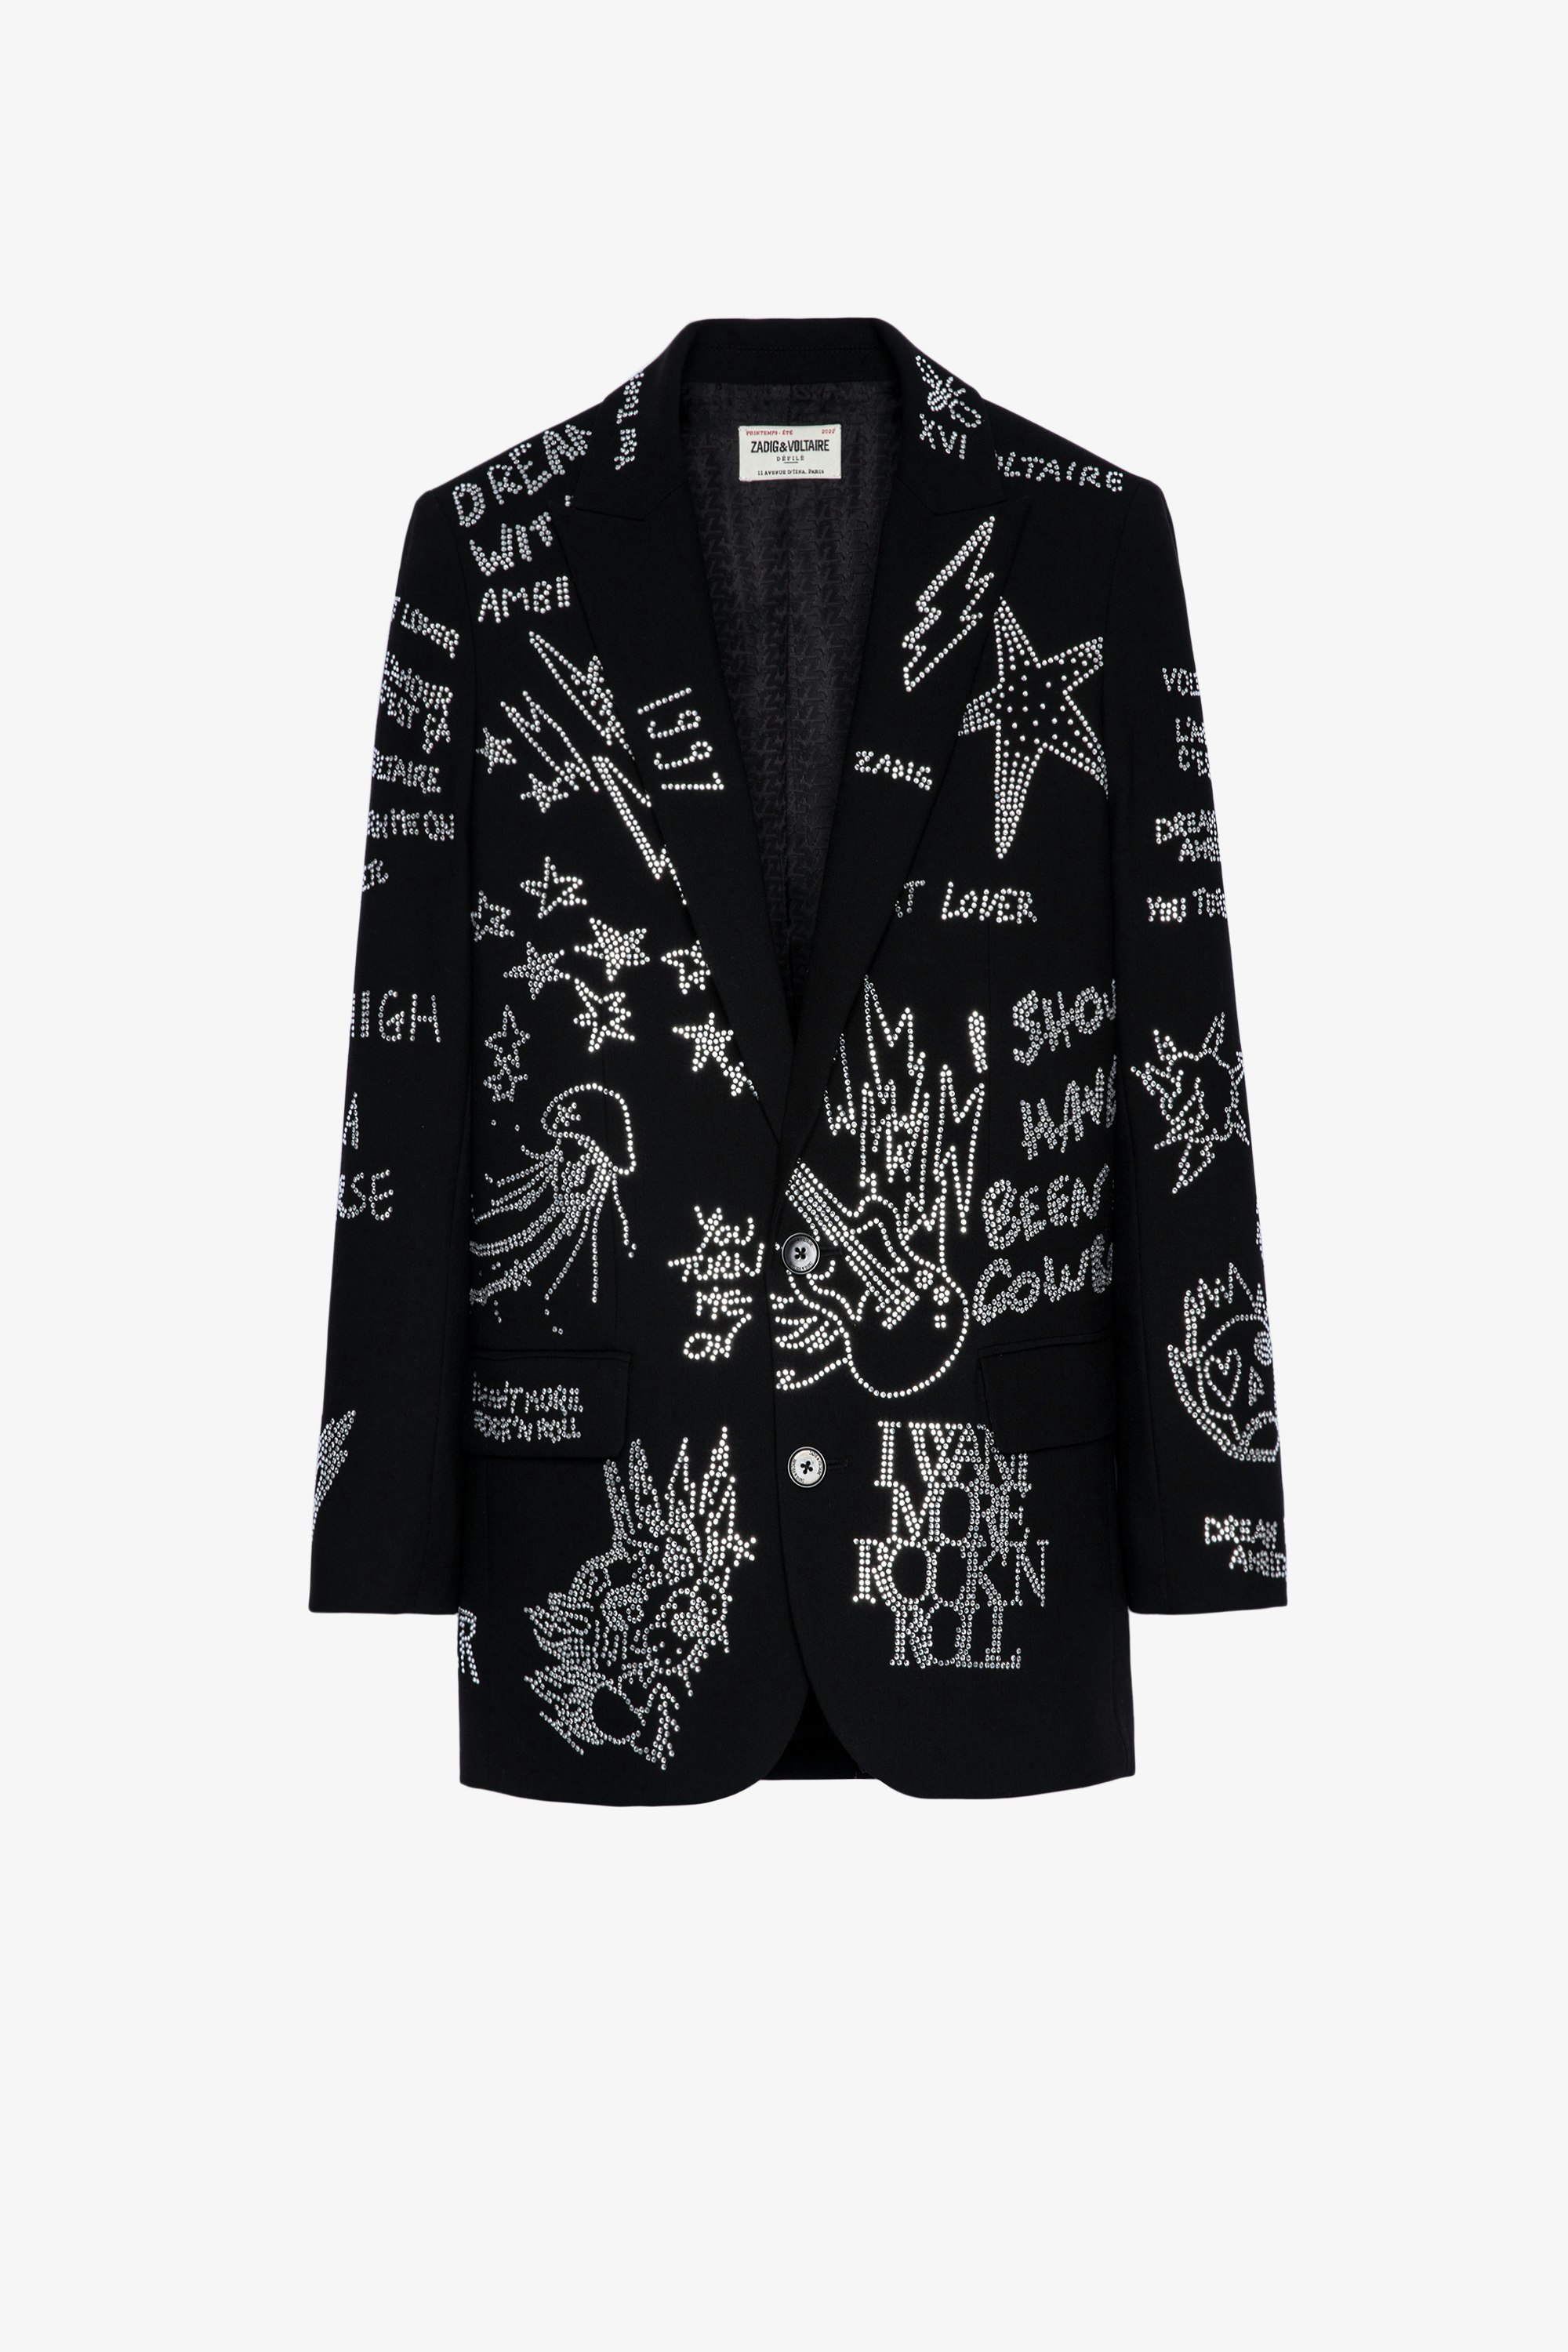 Viva Strass ジャケット Women's black tailored jacket with rhinestone pattern